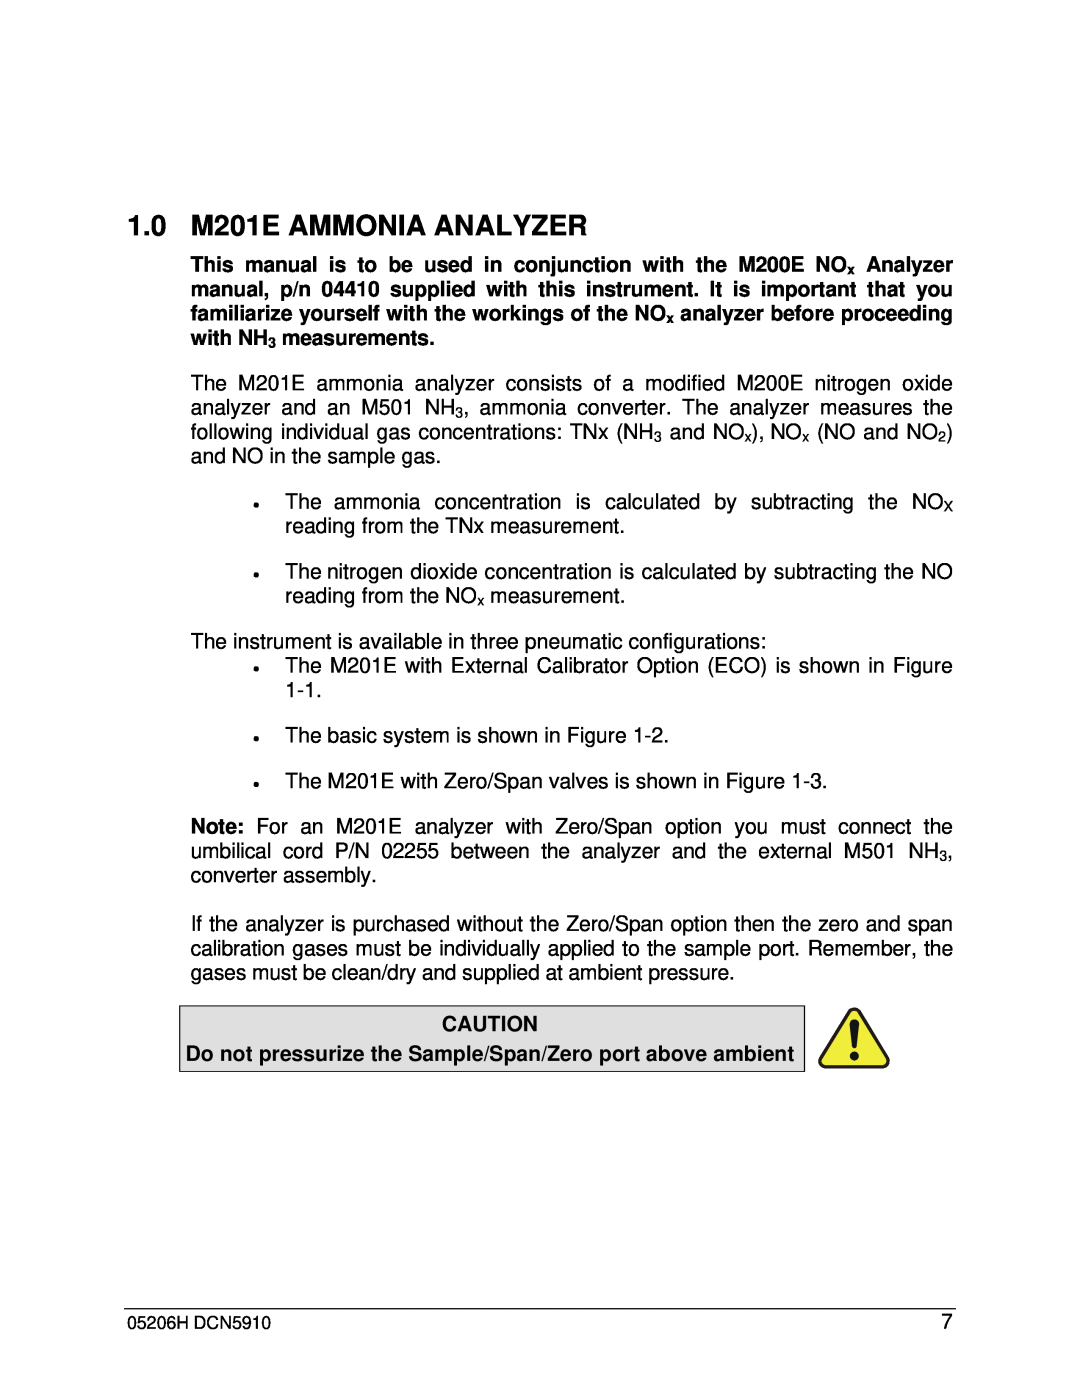 Teledyne manual 1.0 M201E AMMONIA ANALYZER 